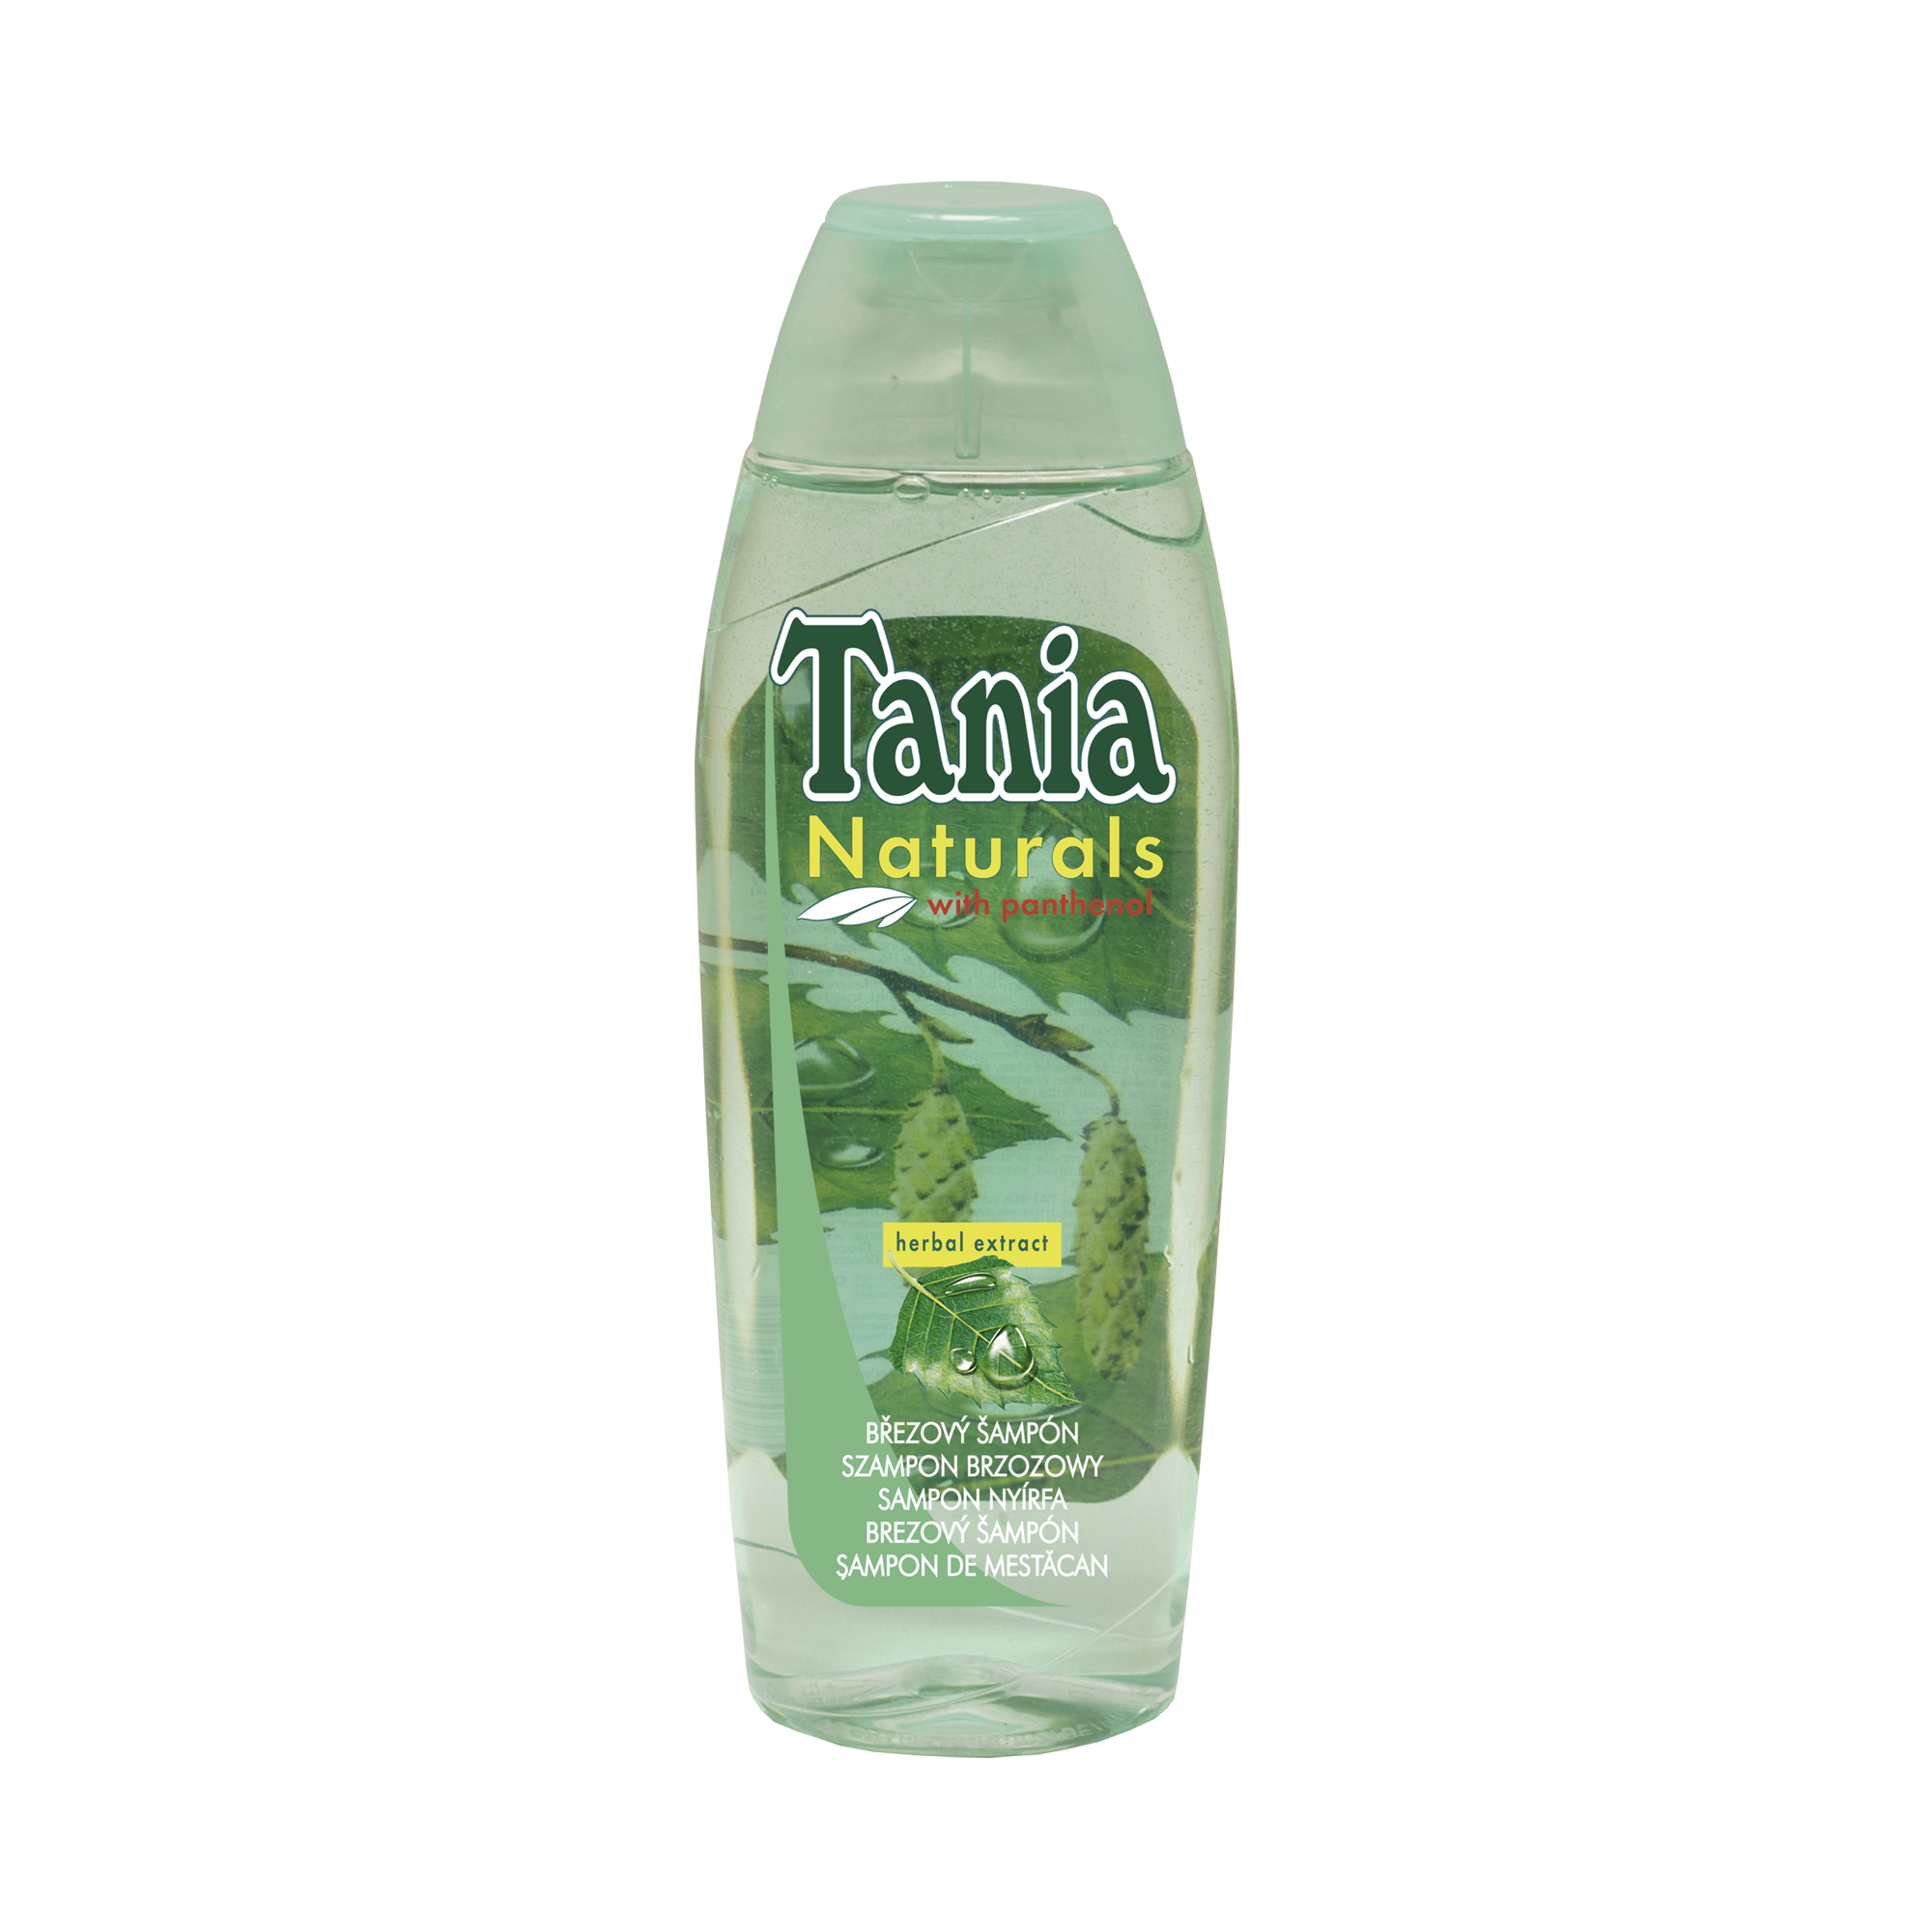 Tania naturals birch shampoo